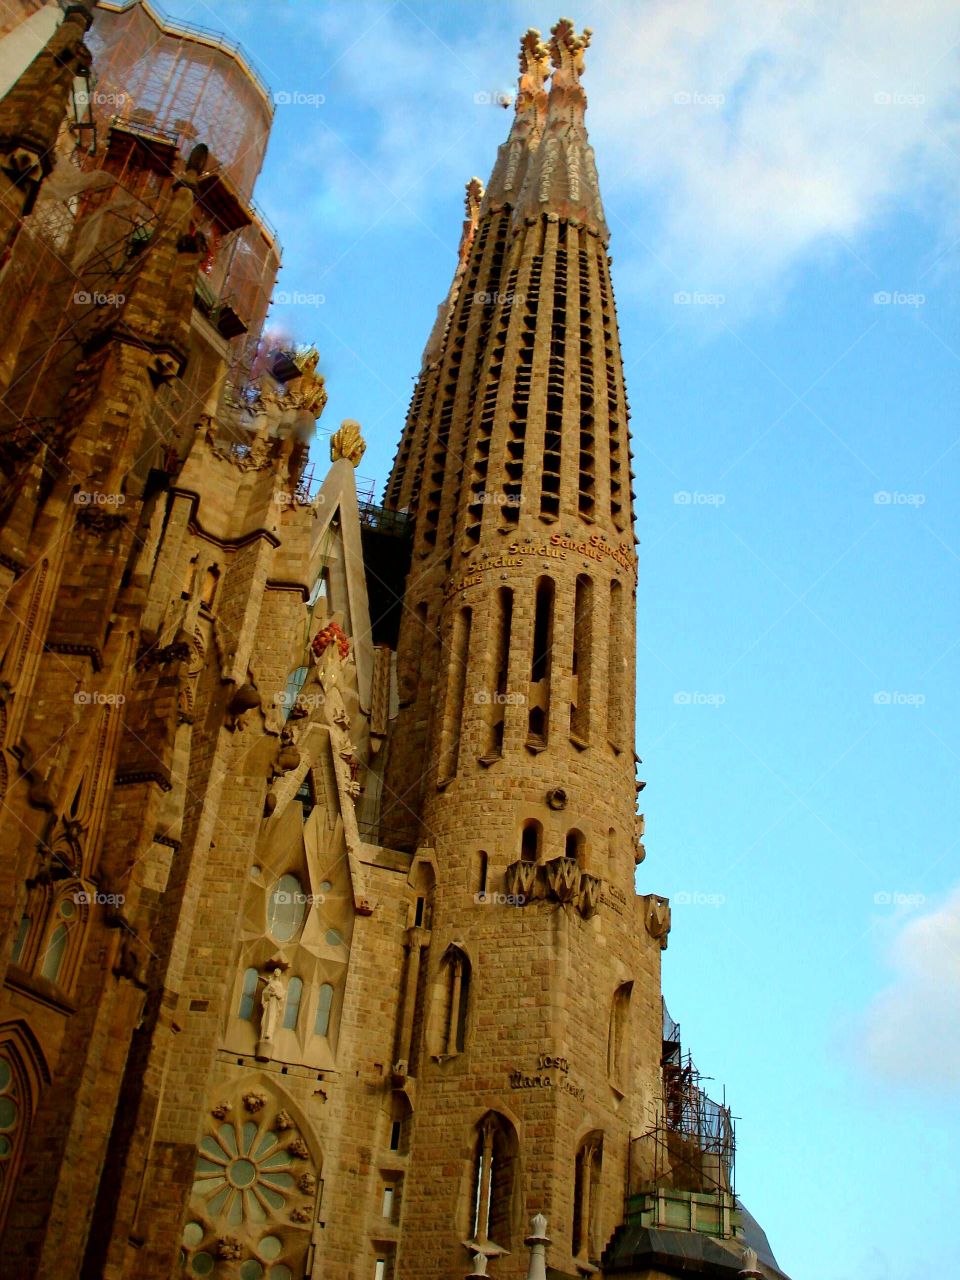 The intricate architecture  of Sagrada Familia